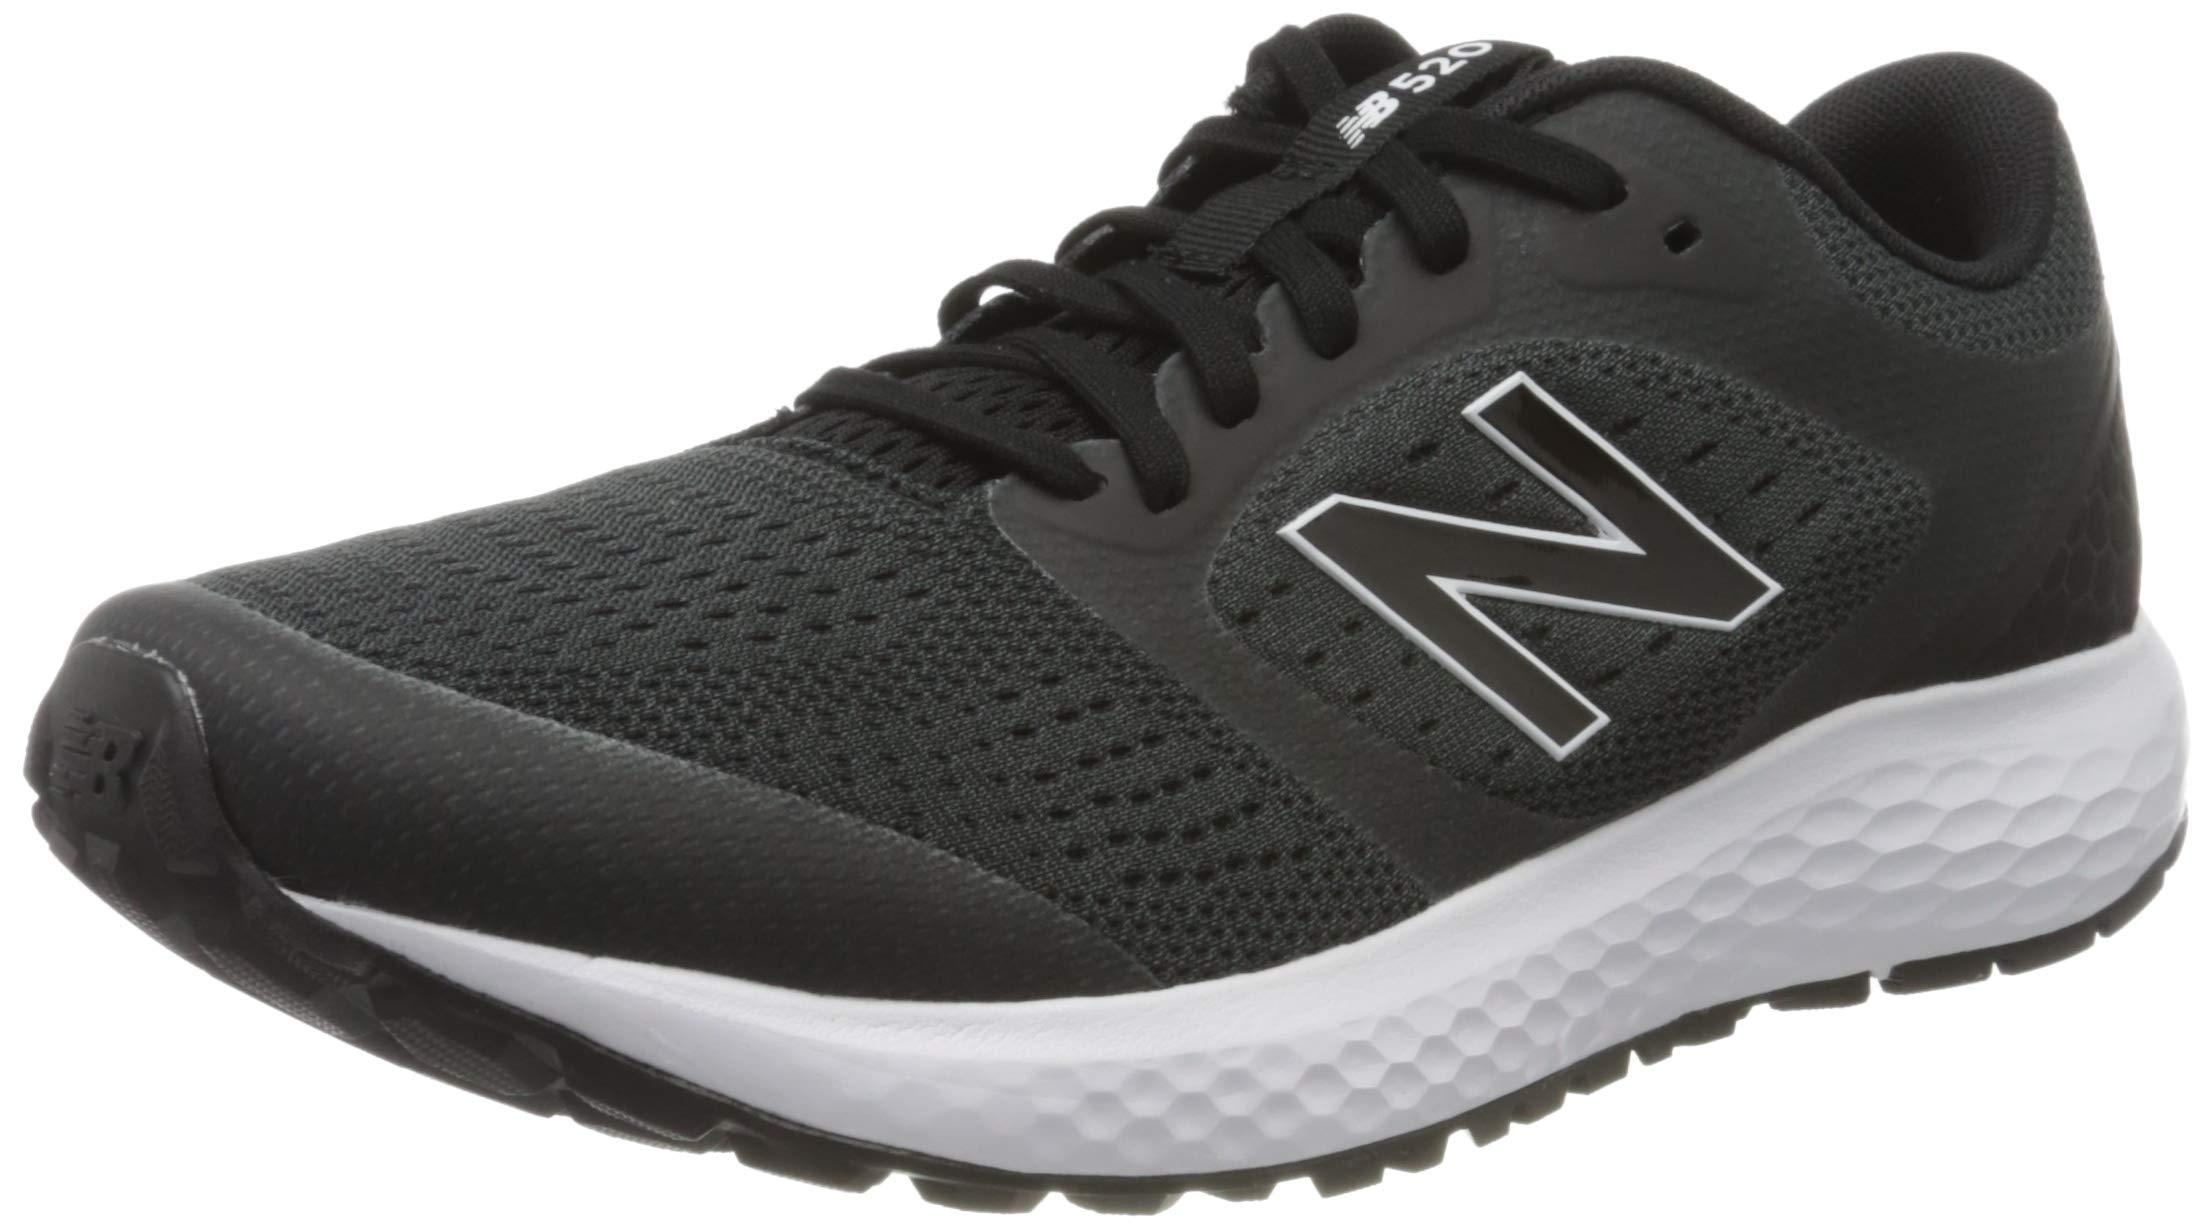 New Balance Synthetic 520 V6 Running Shoe in Black for Men - Lyst